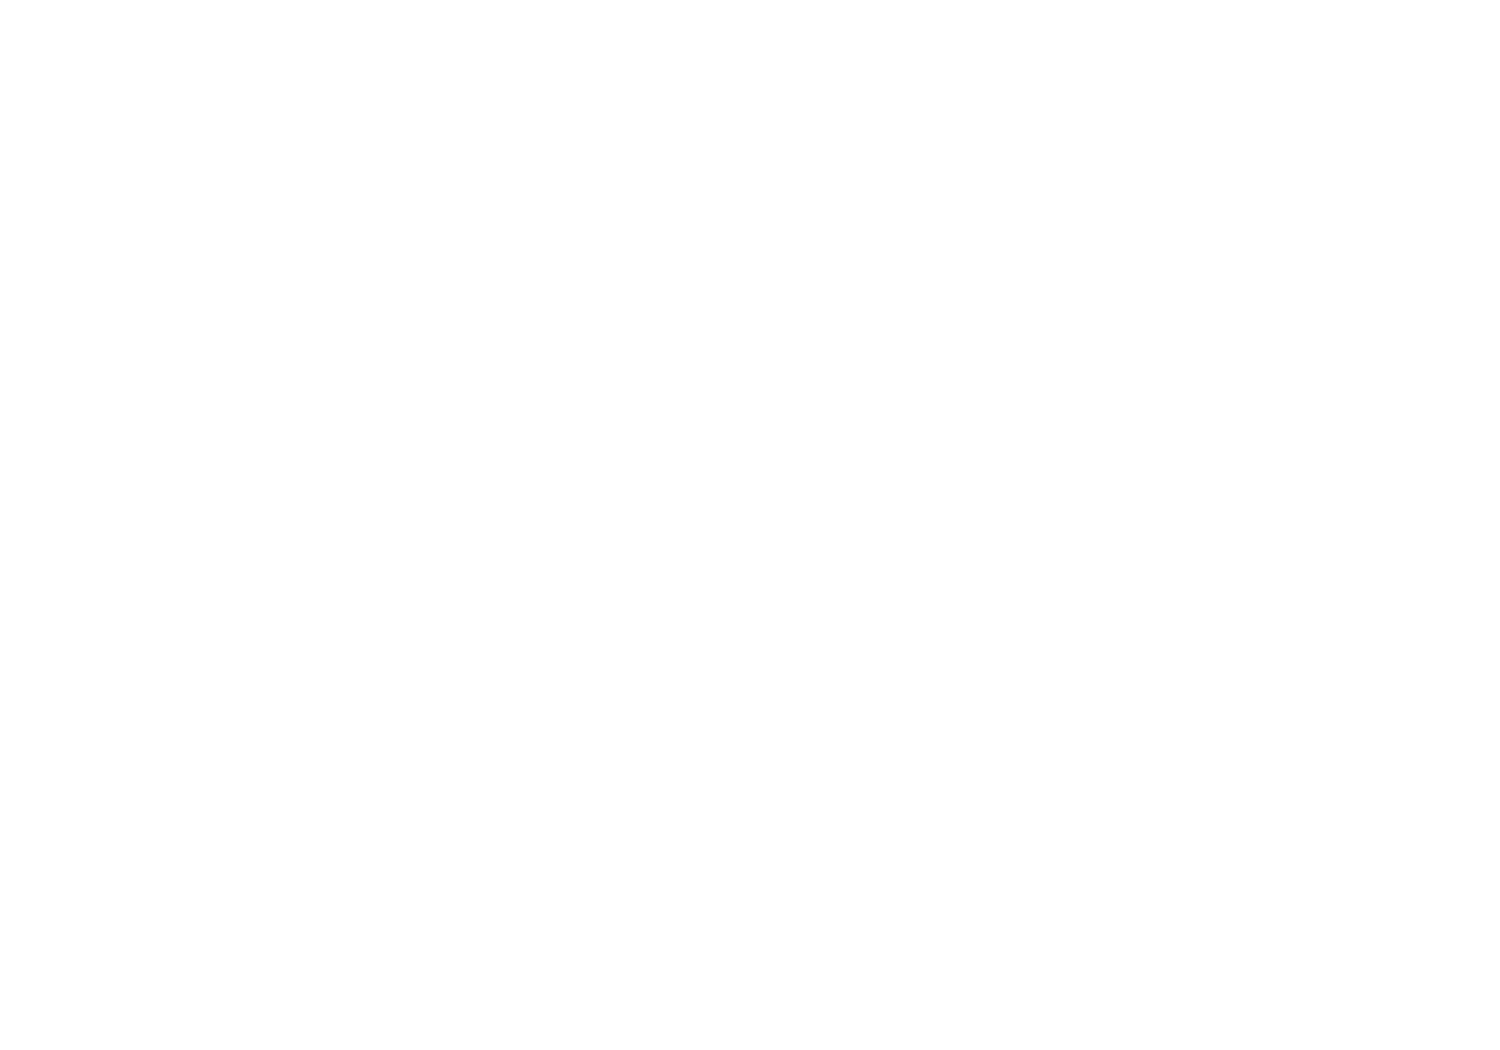 Imagine Reevolution Ltd